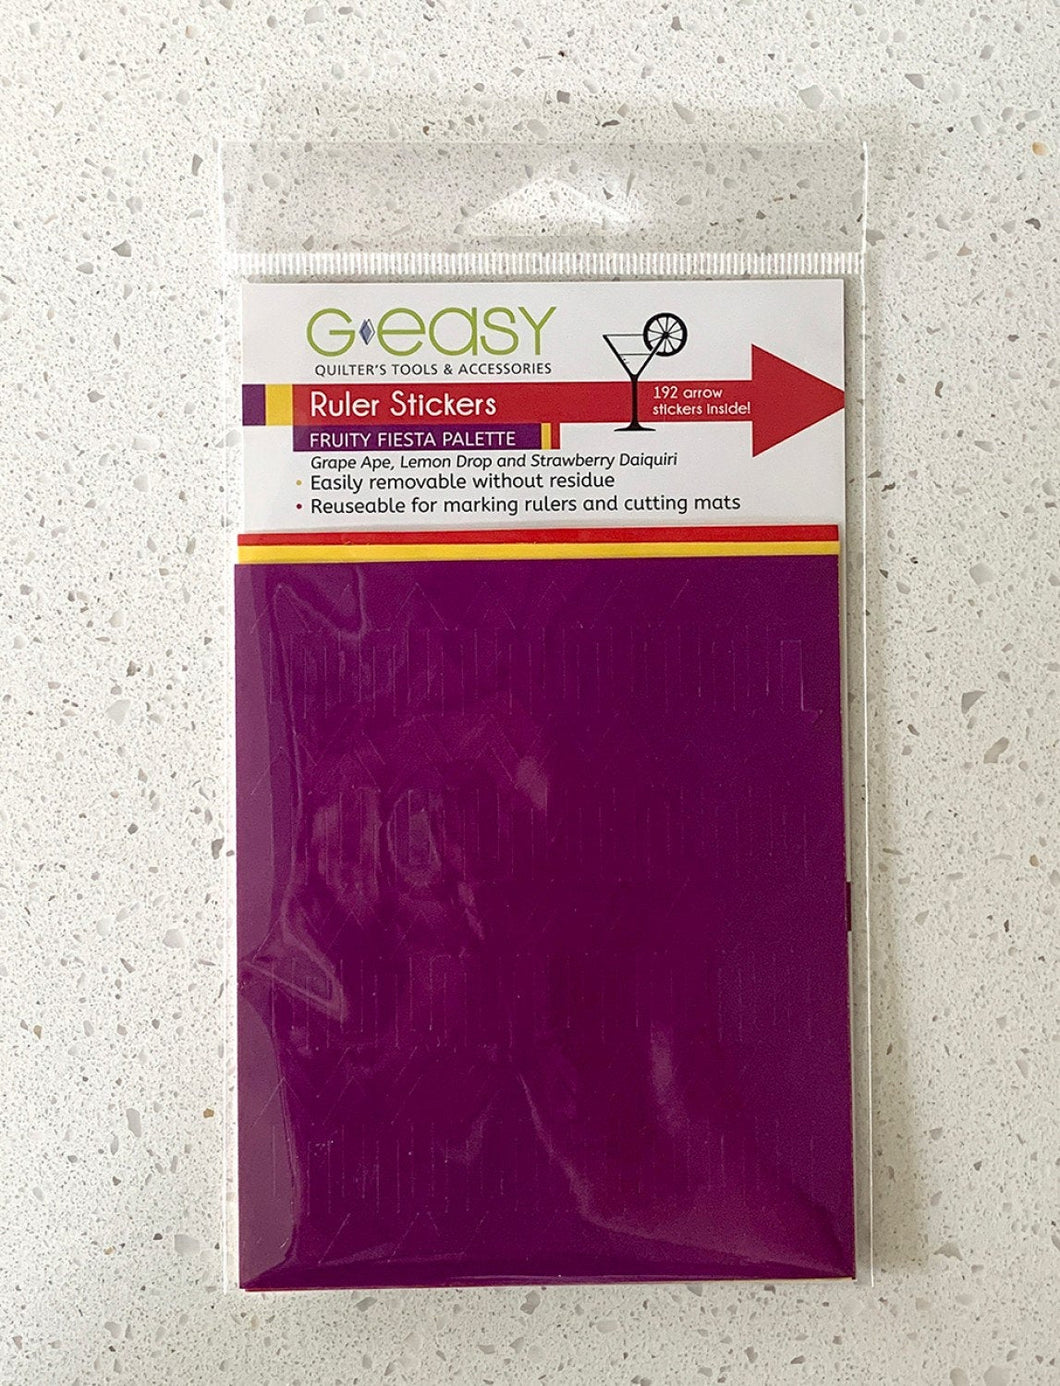 G-Easy Ruler Stickers - Fruity Fiesta Palette from G. E. Designs